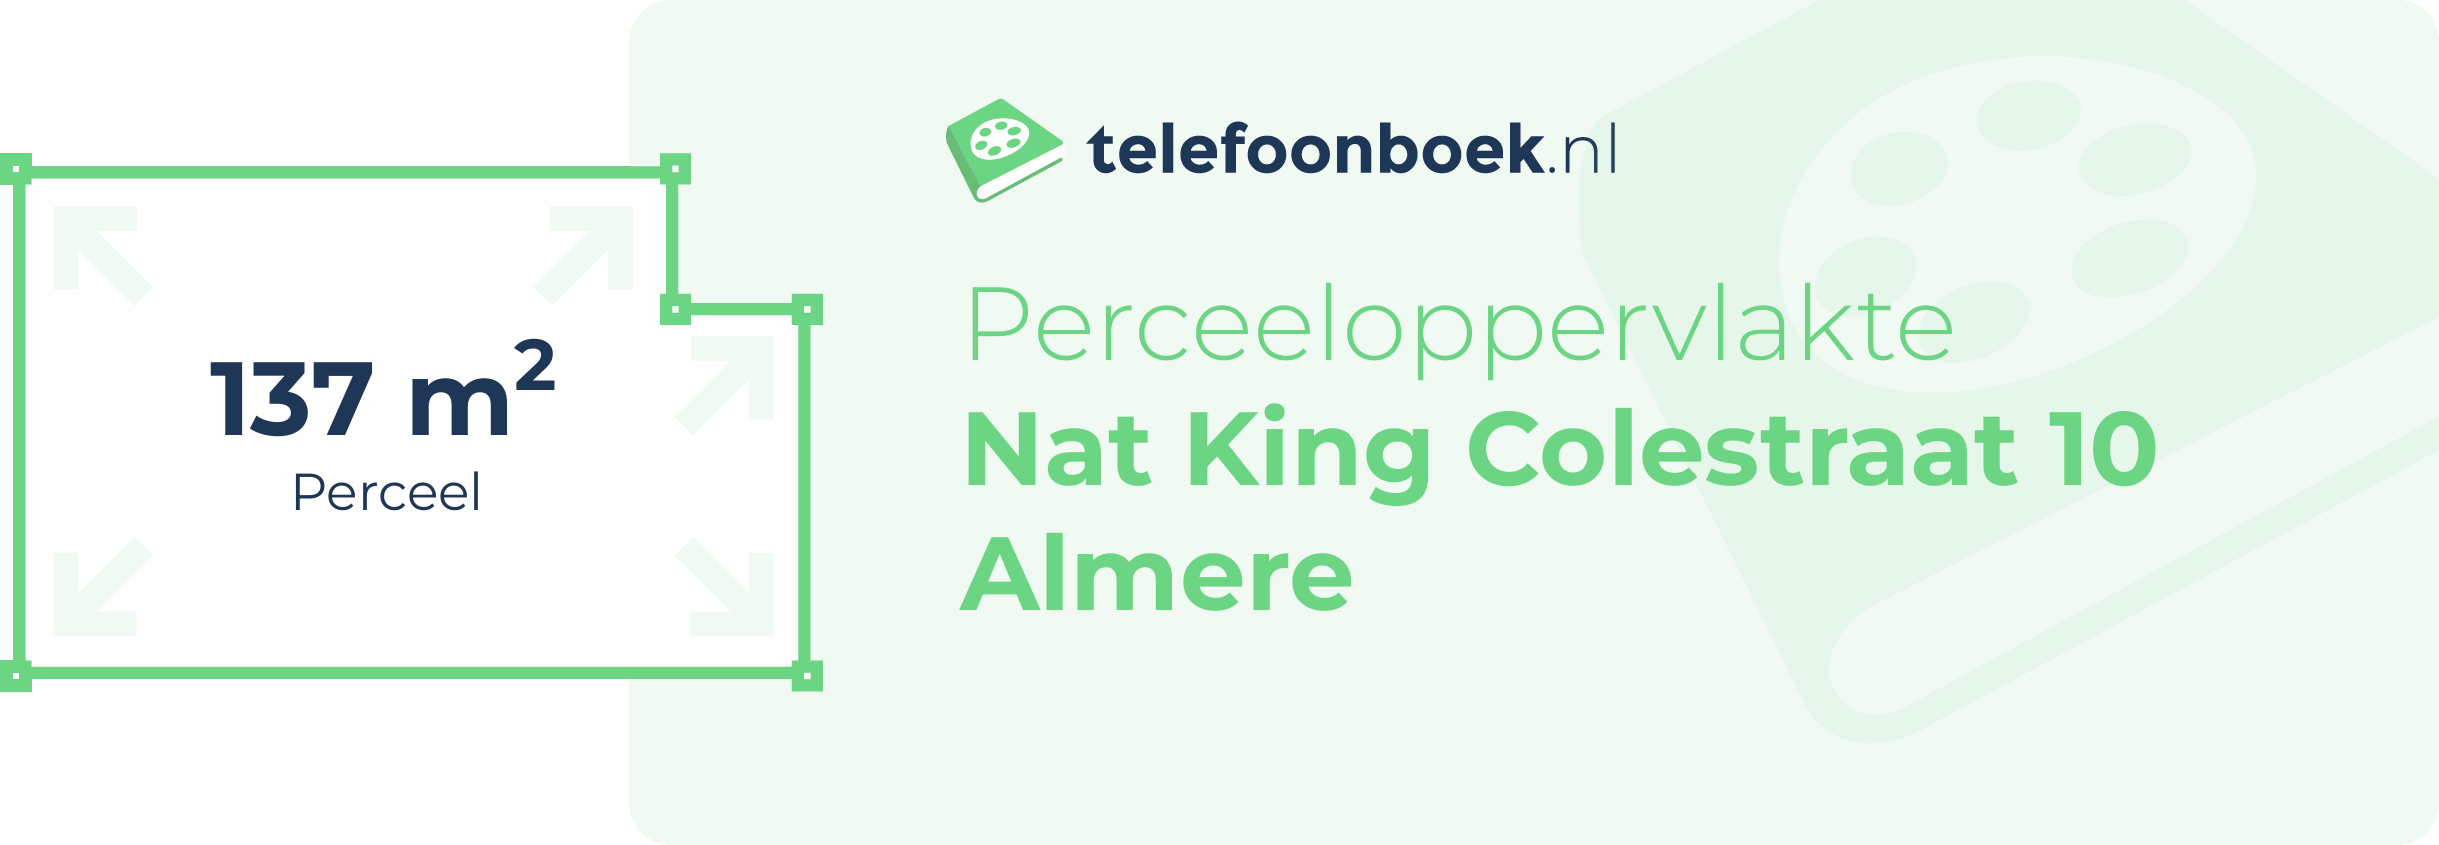 Perceeloppervlakte Nat King Colestraat 10 Almere